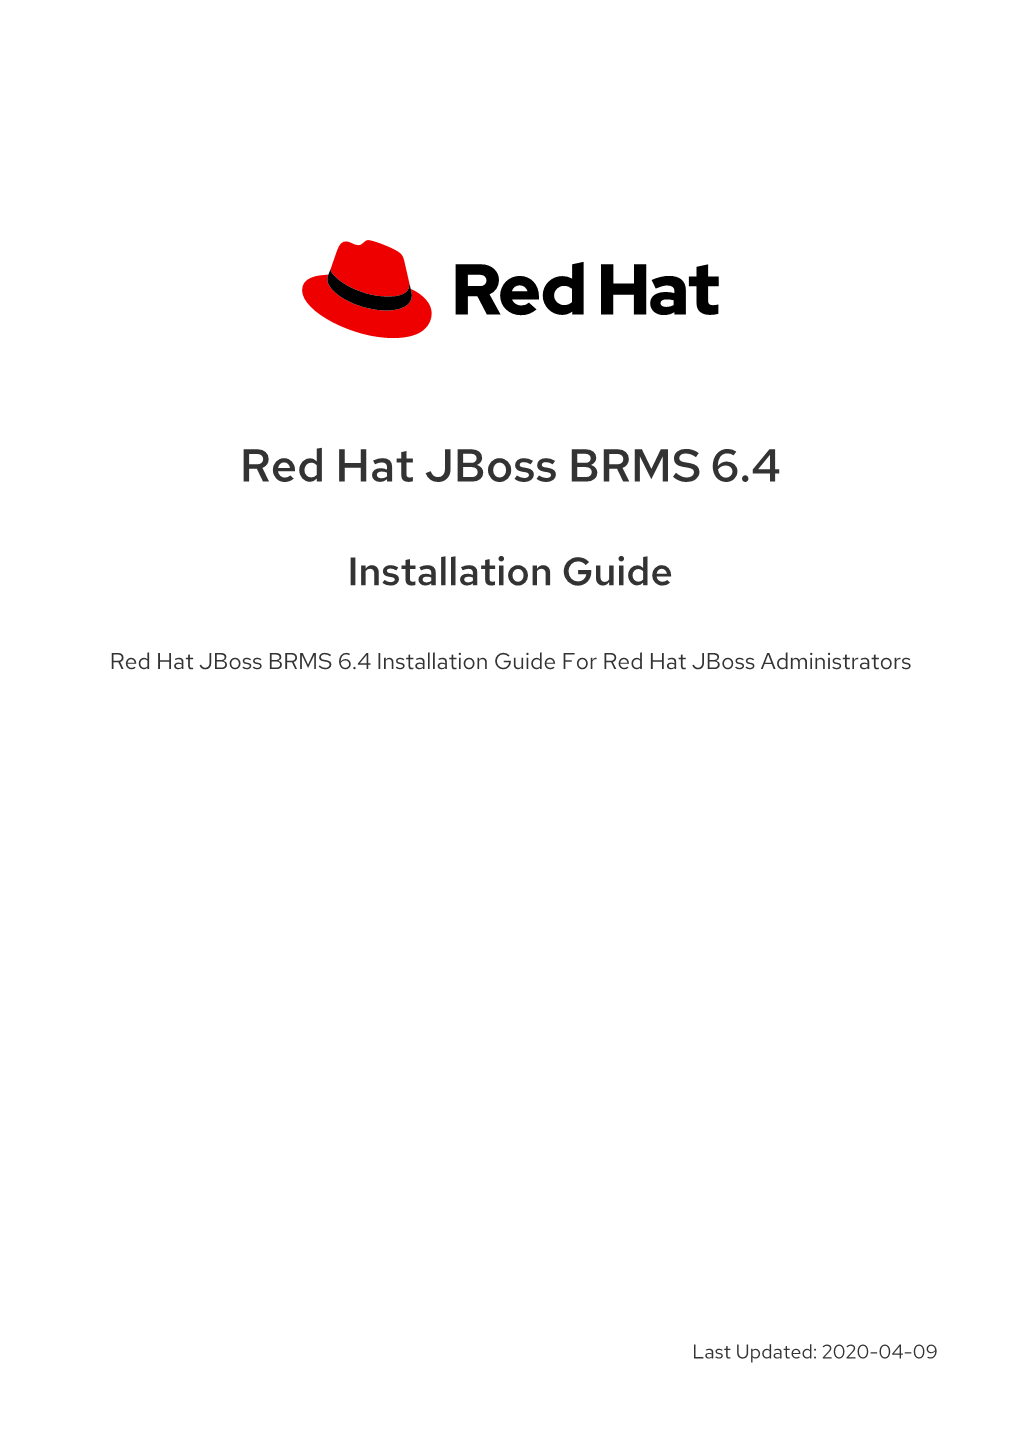 Red Hat Jboss BRMS 6.4 Installation Guide for Red Hat Jboss Administrators